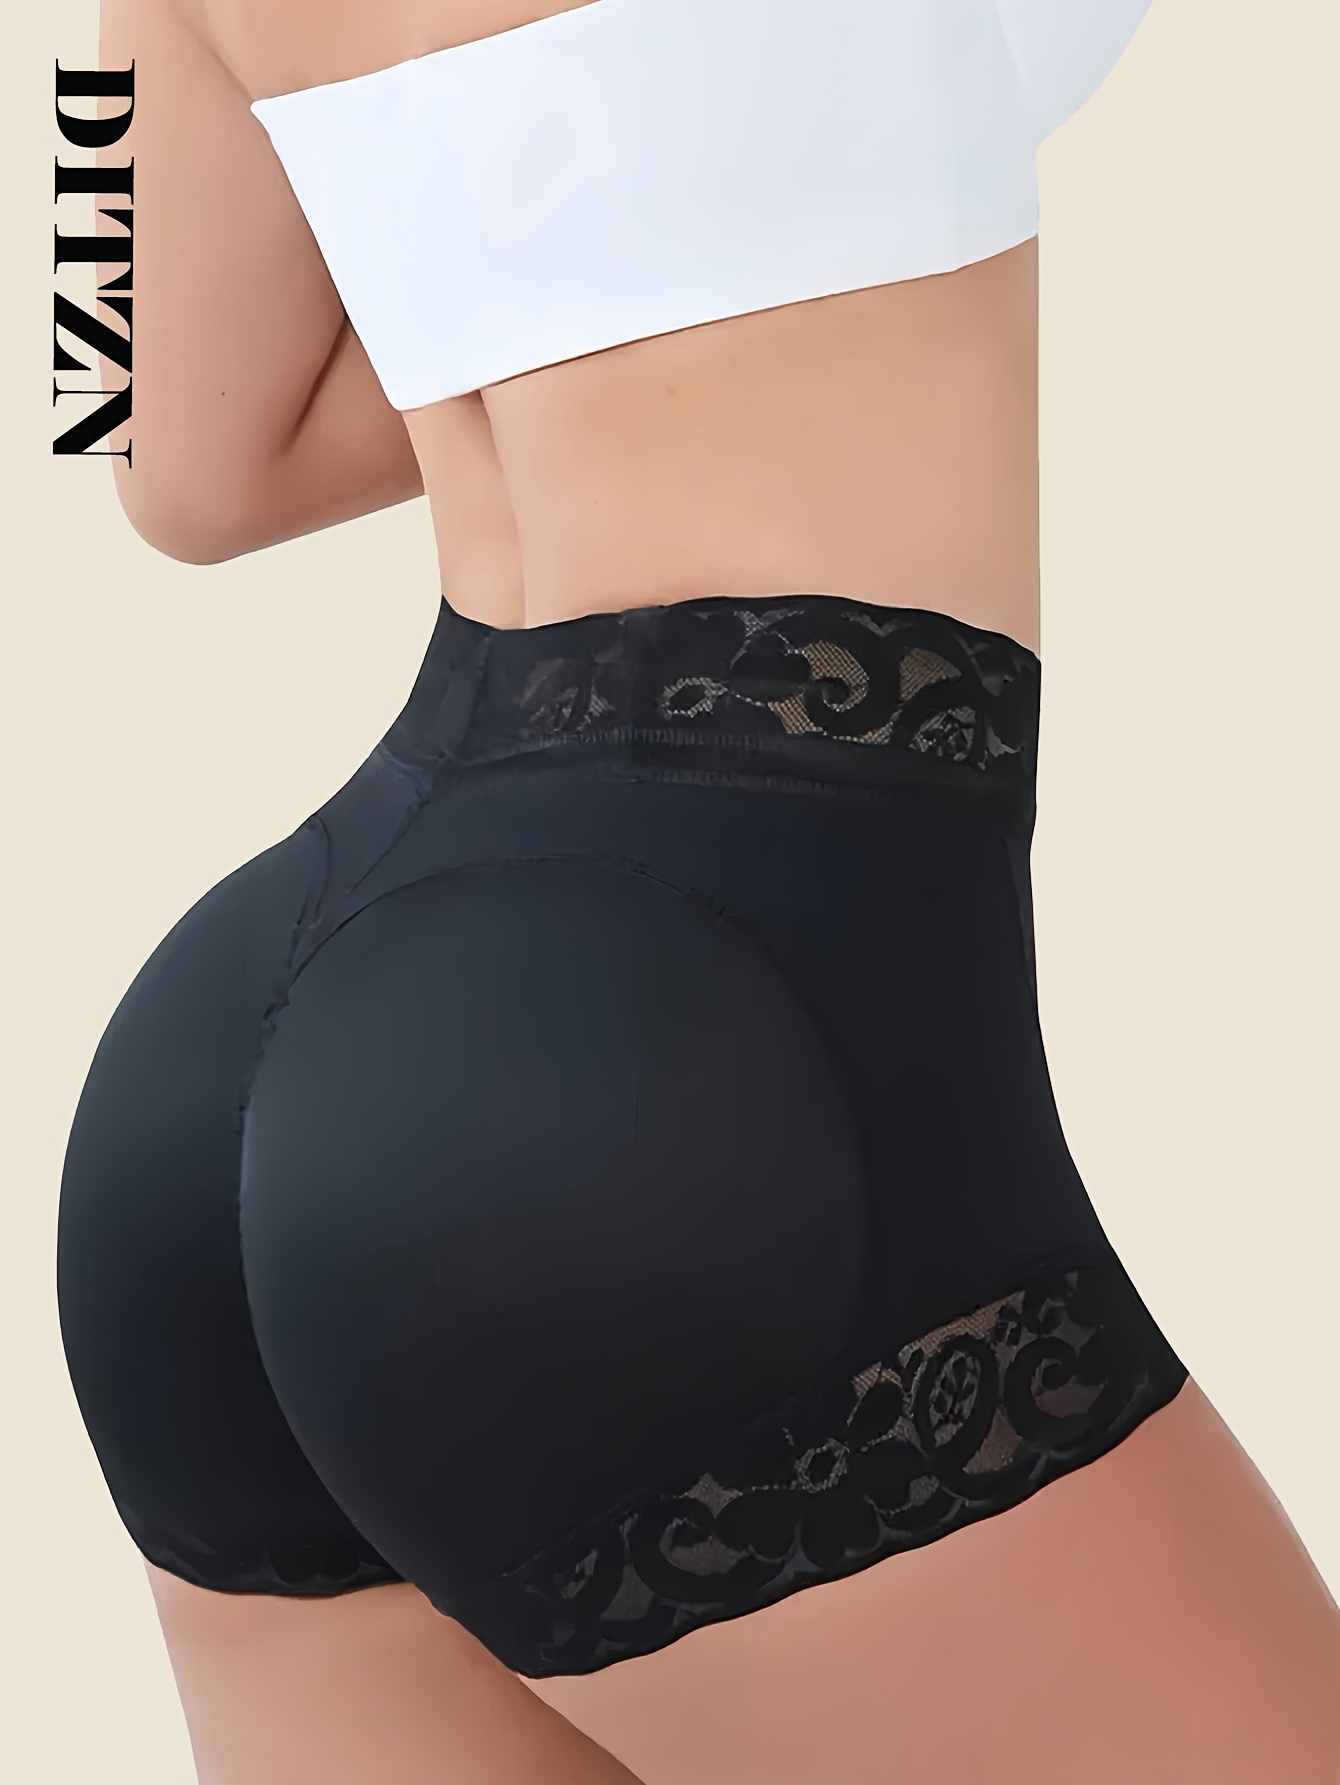 Butt Lifter Shapewear Shorts For Women, Tummy Control Panties High Waist  Trainer Shorts Body Shaper Briefs With Zipper, Women's Activewear